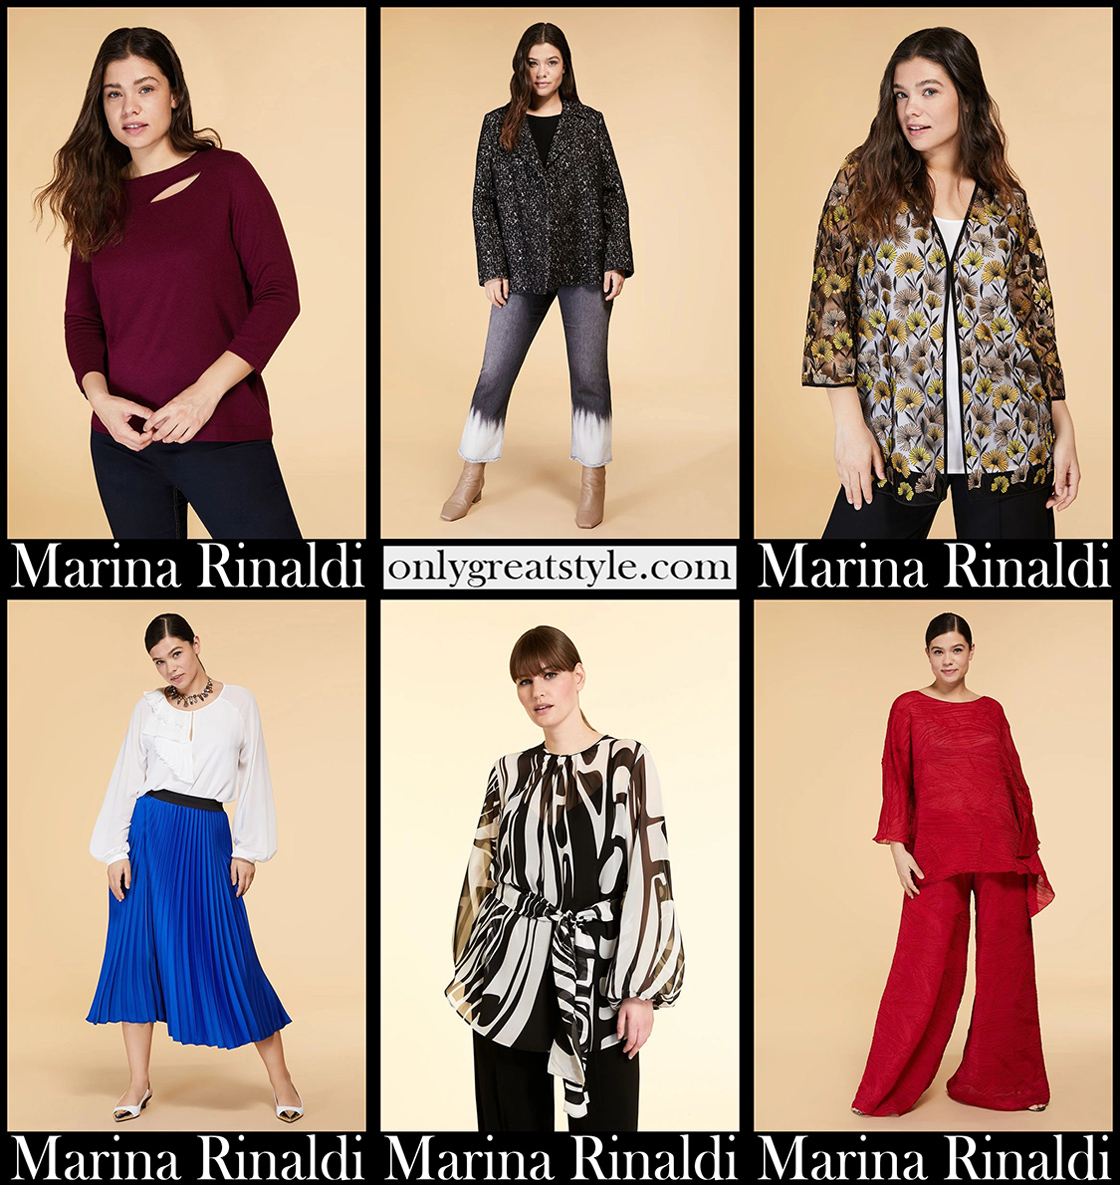 Marina Rinaldi plus size clothing fashion curvy women